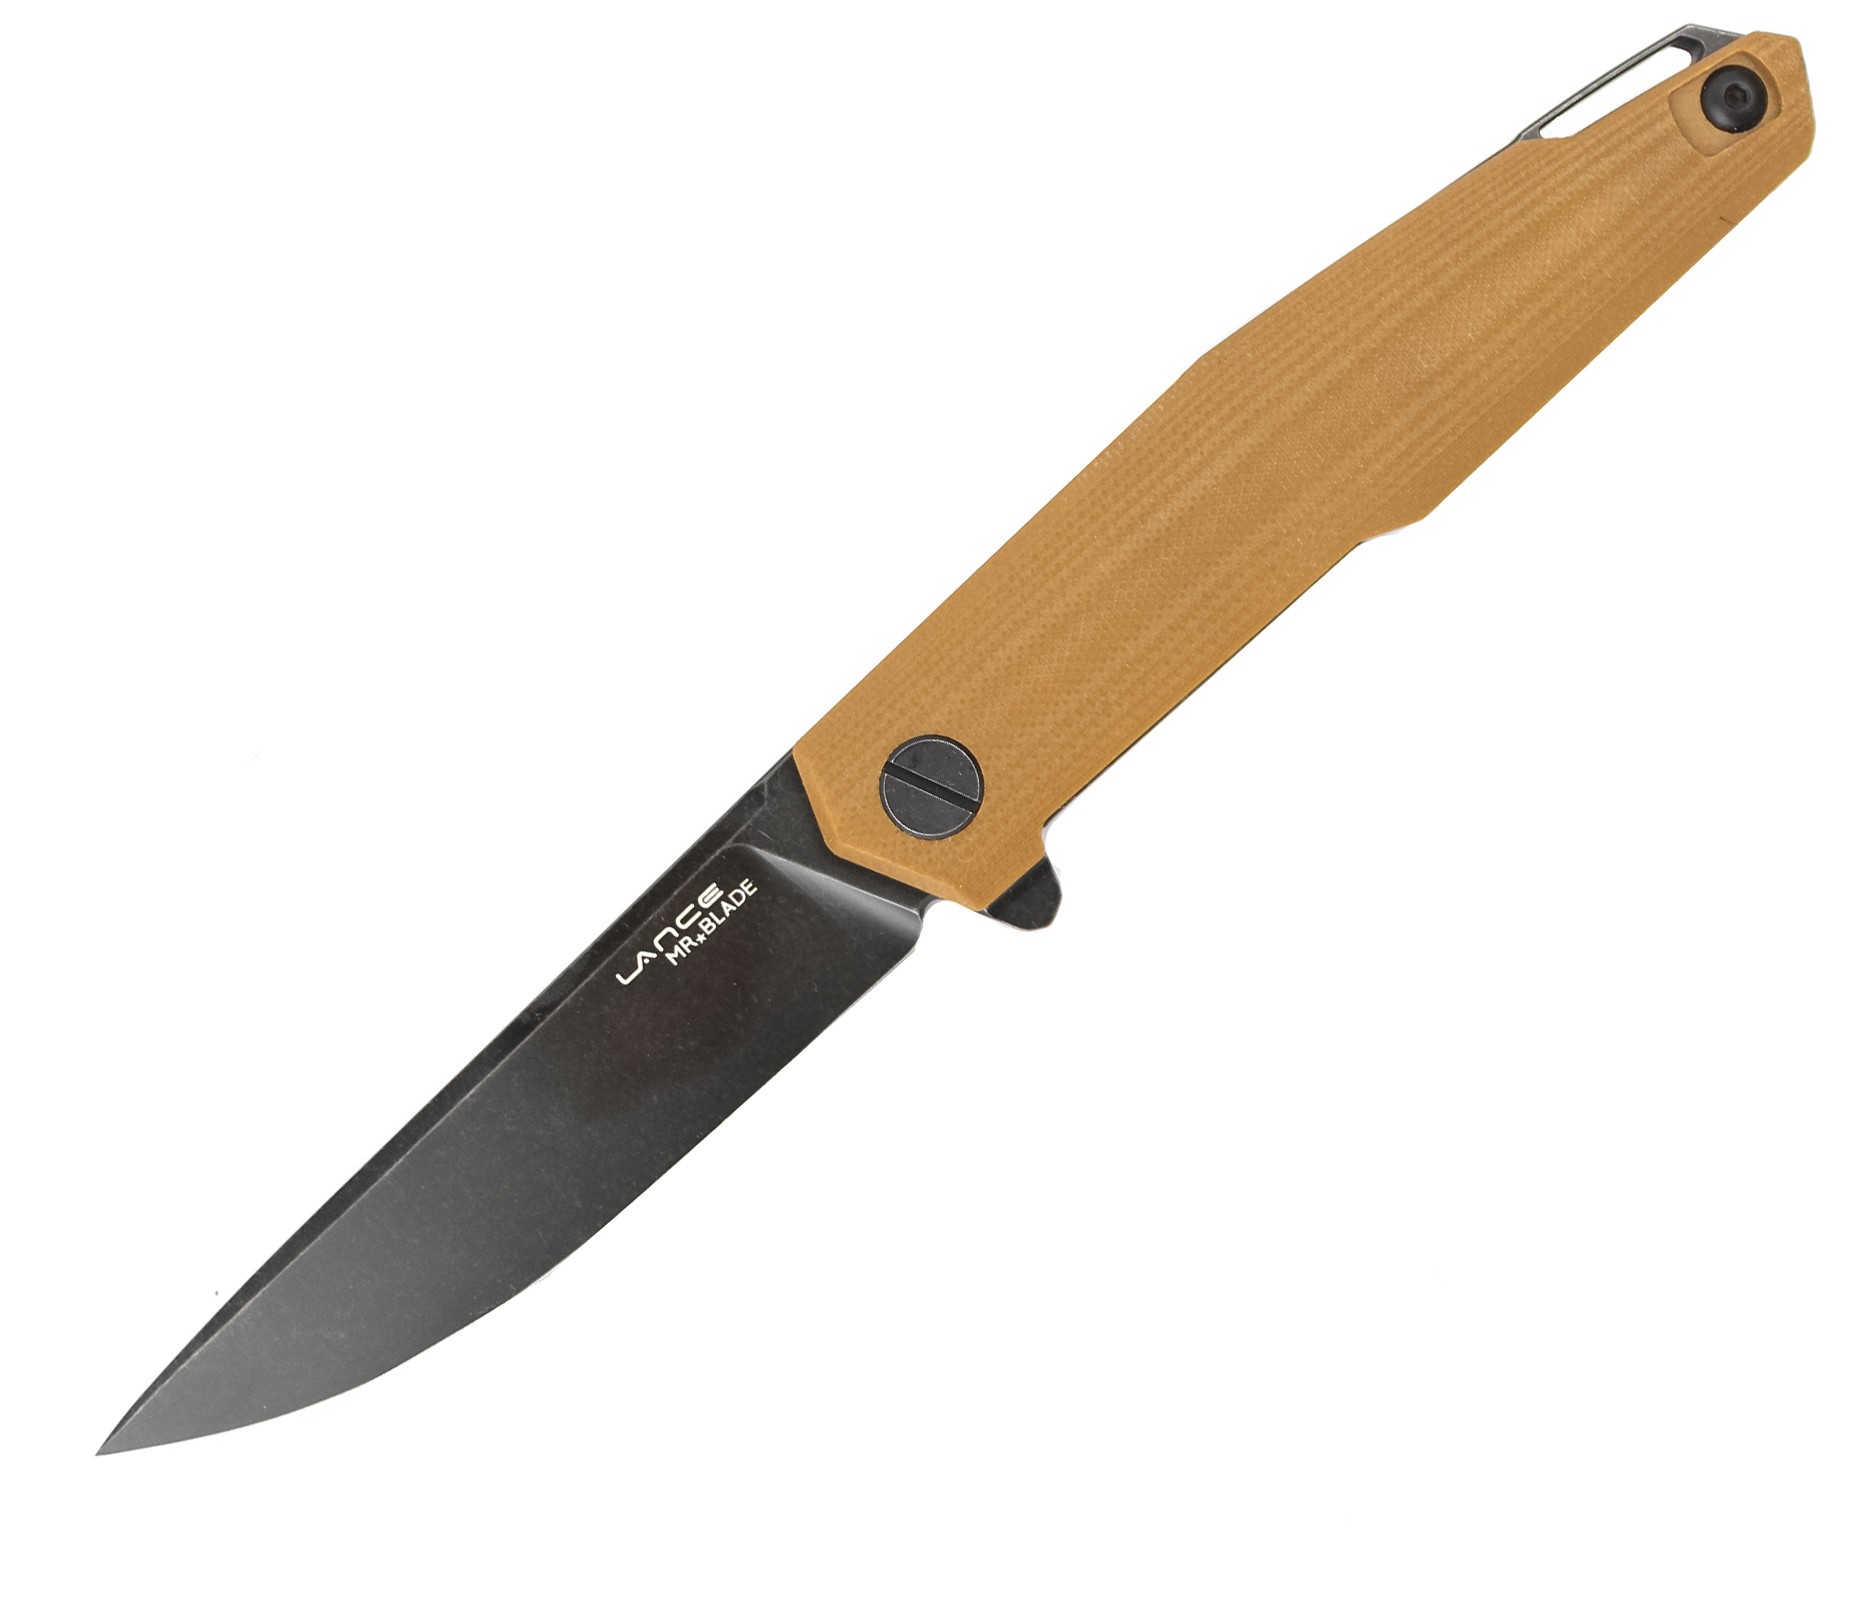 Нож Mr.Blade Lance M. 1-a D2 brown handle складной - фото 1